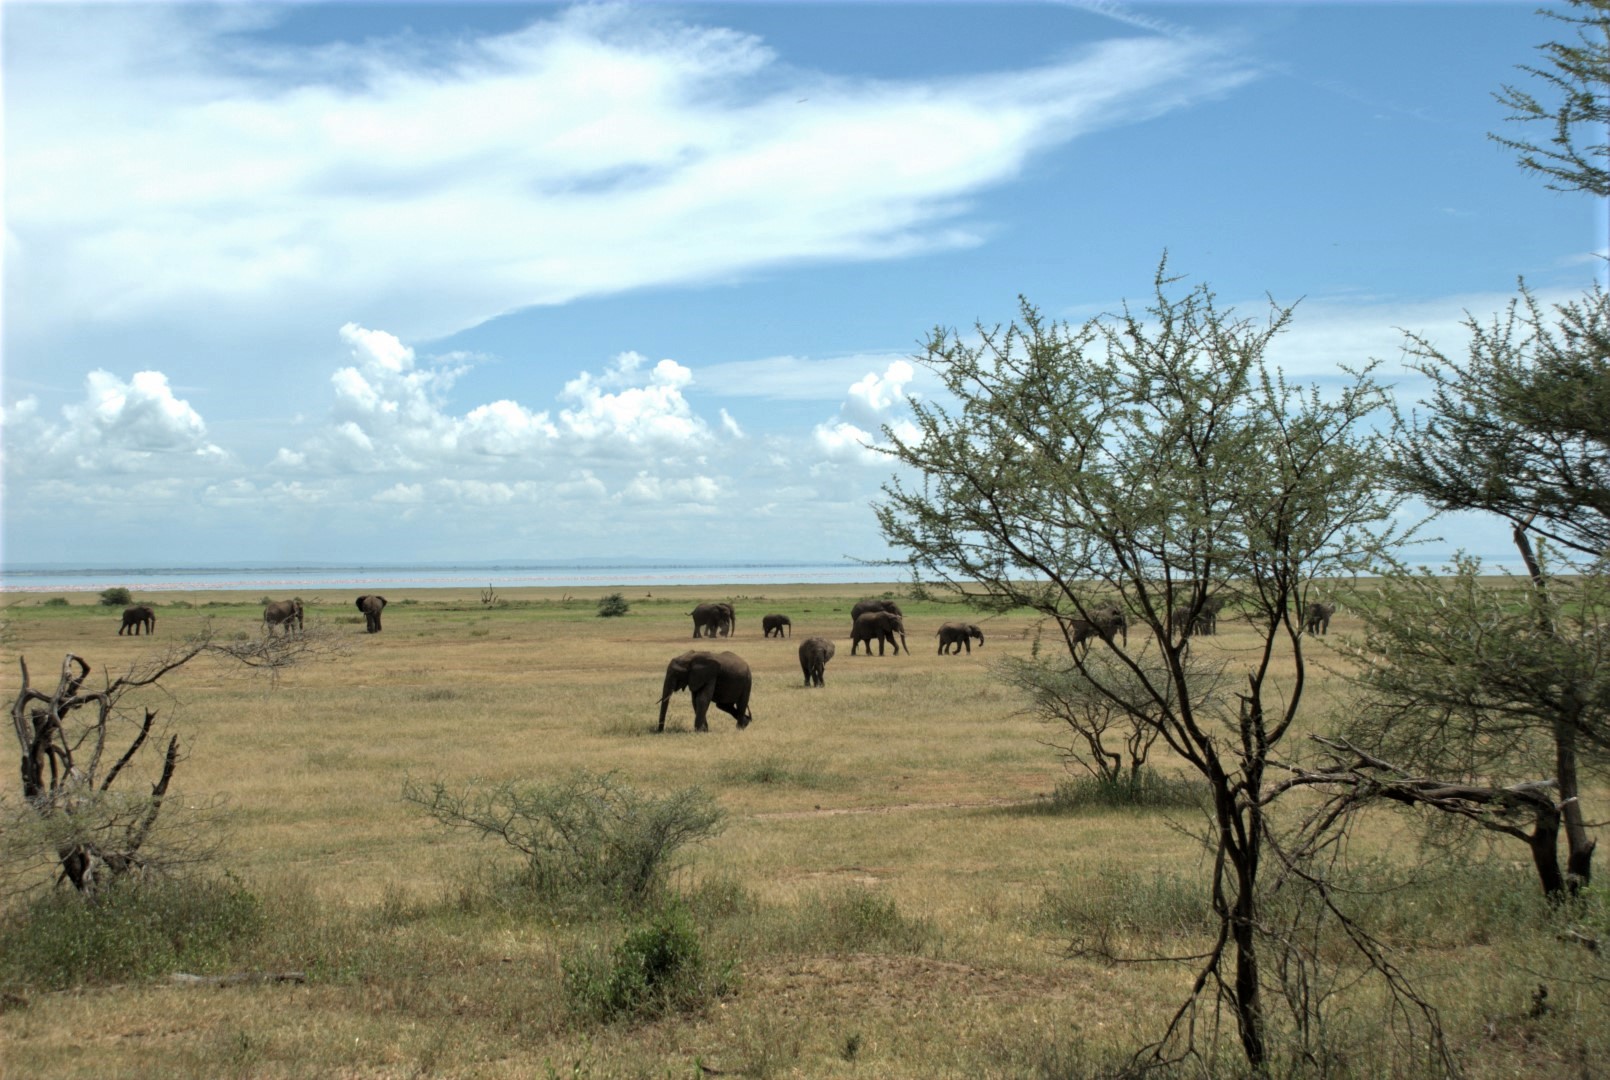 Elephants near Kilimanjaro